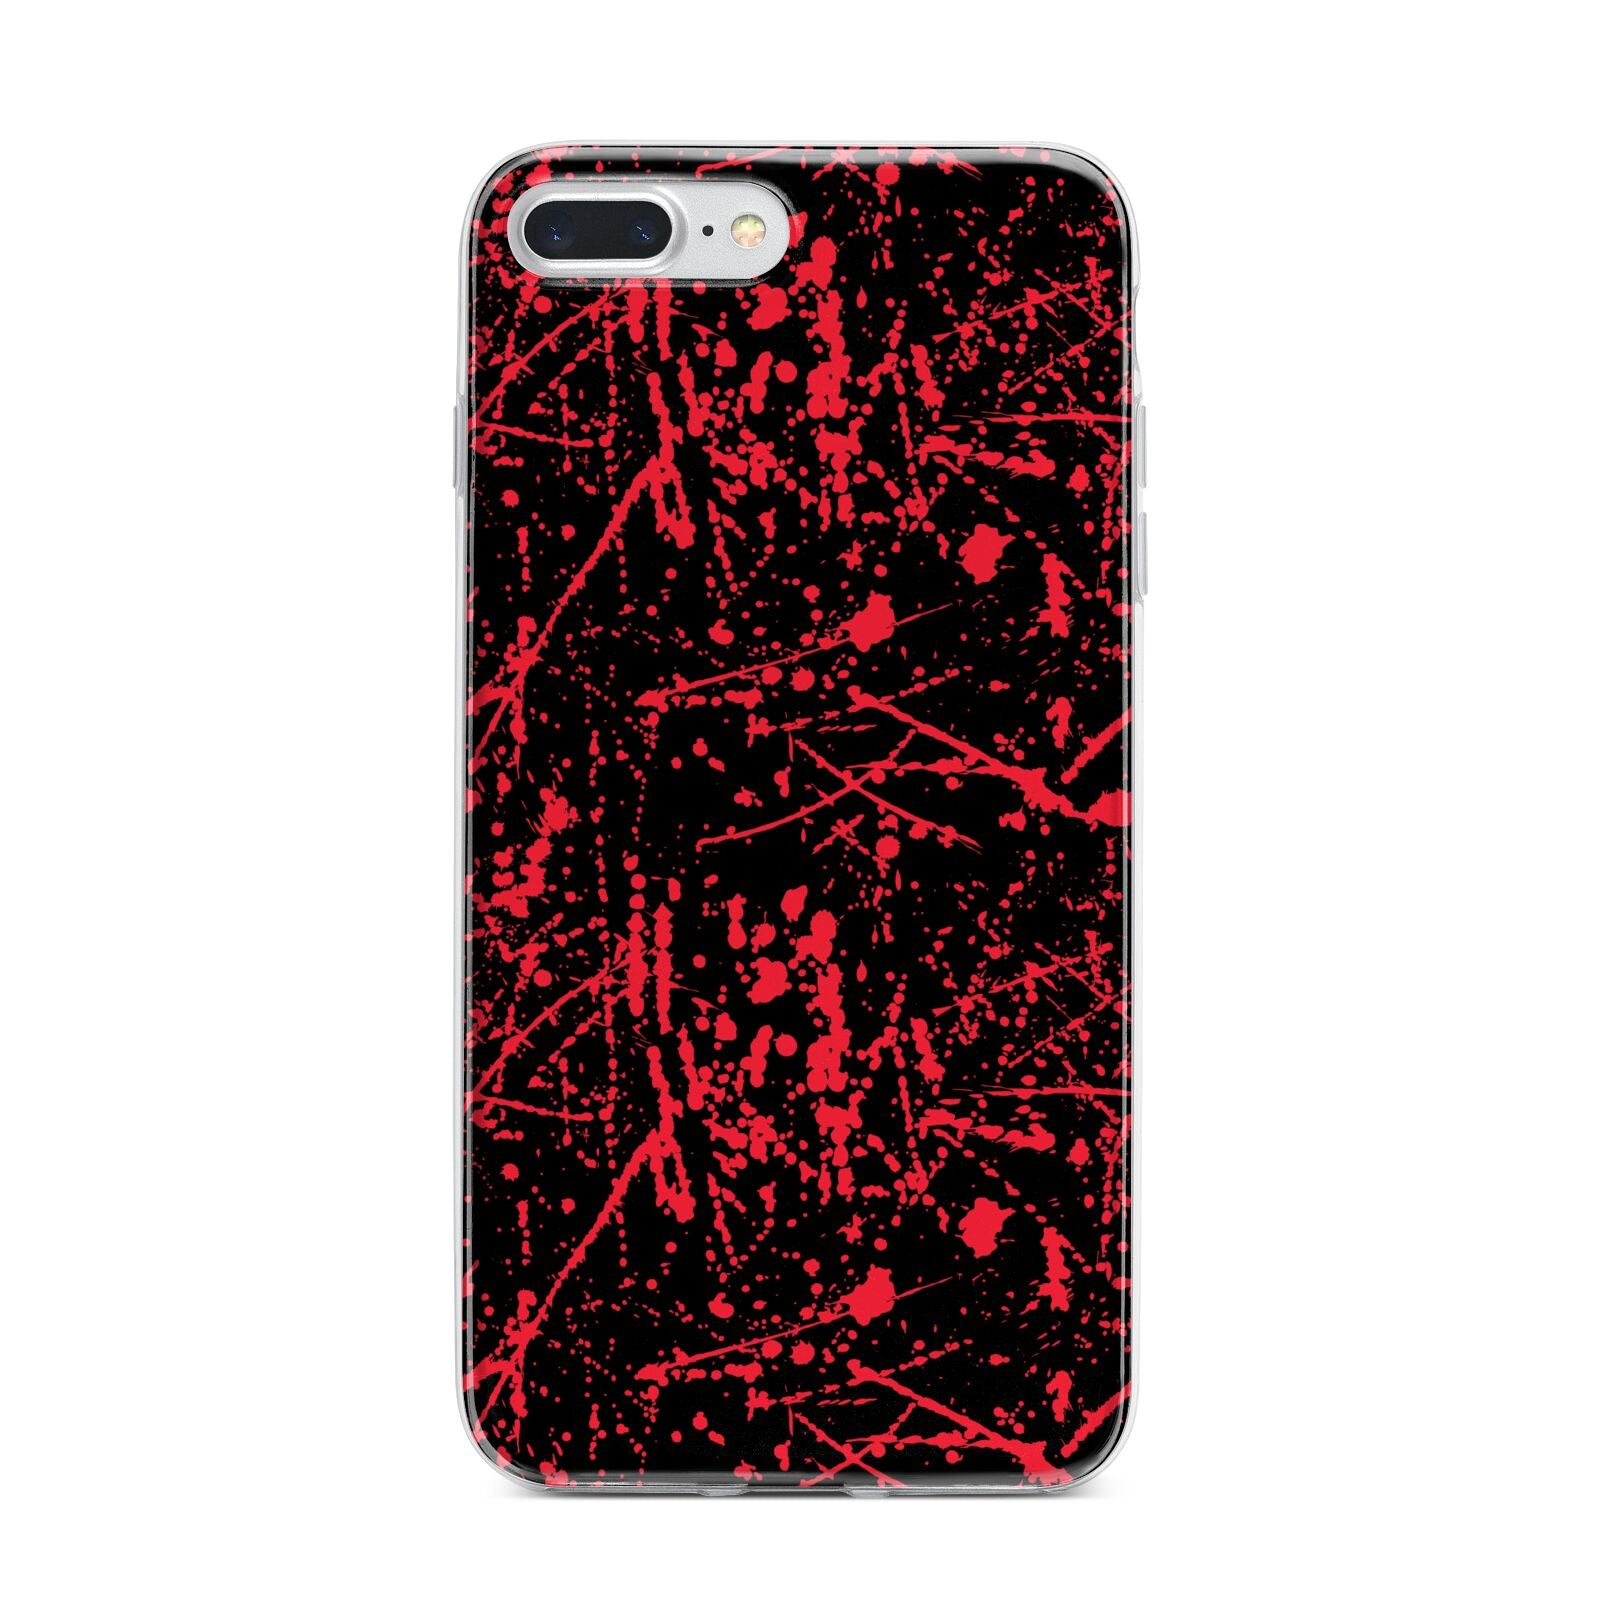 Blood Splatters iPhone 7 Plus Bumper Case on Silver iPhone